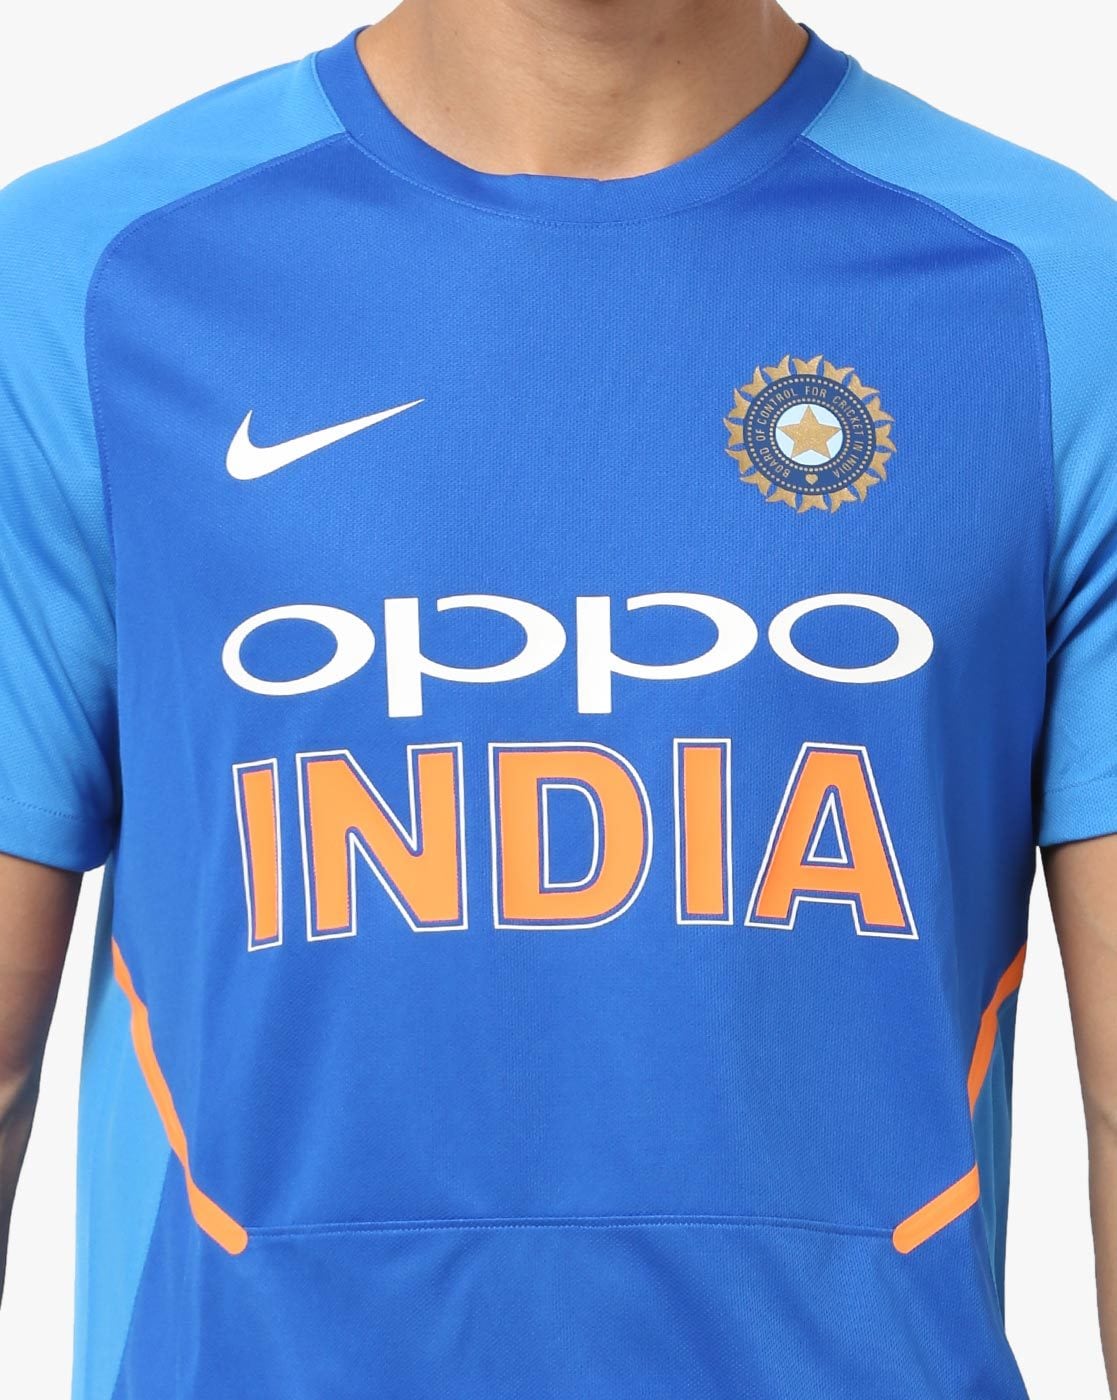 buy nike jersey online india